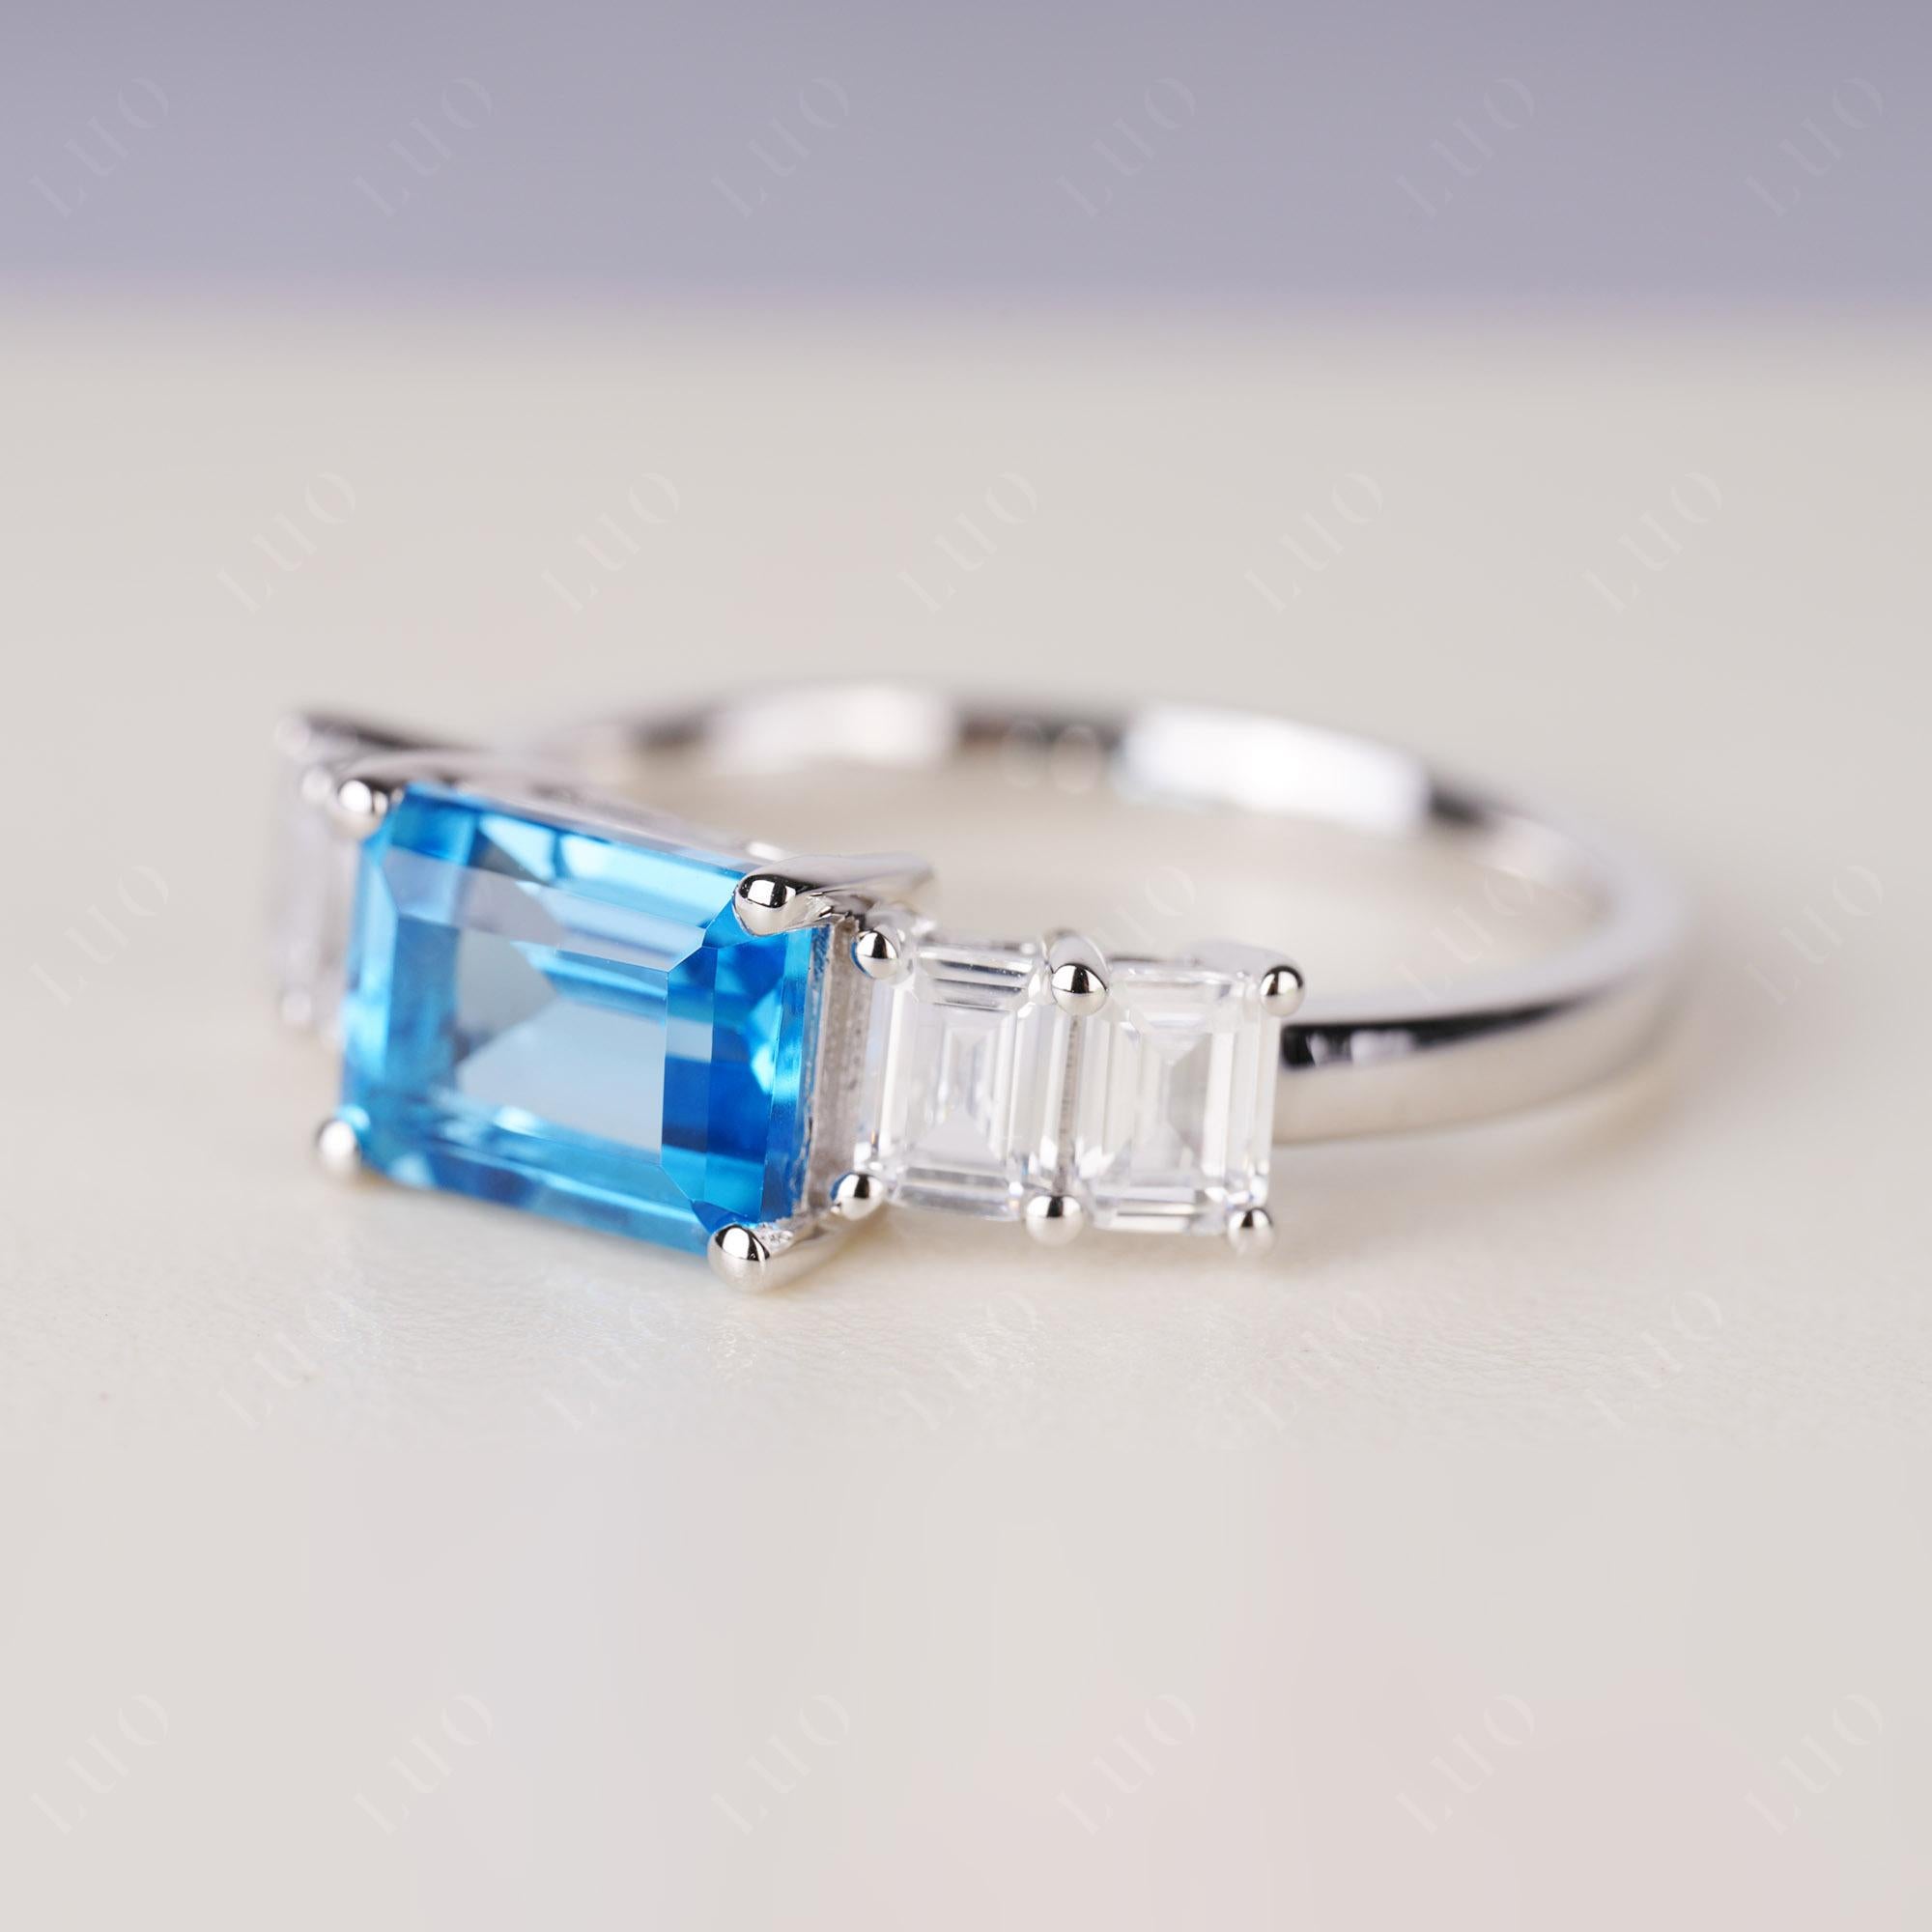 East West Emerald Cut Swiss Blue Topaz Ring | LUO Jewelry